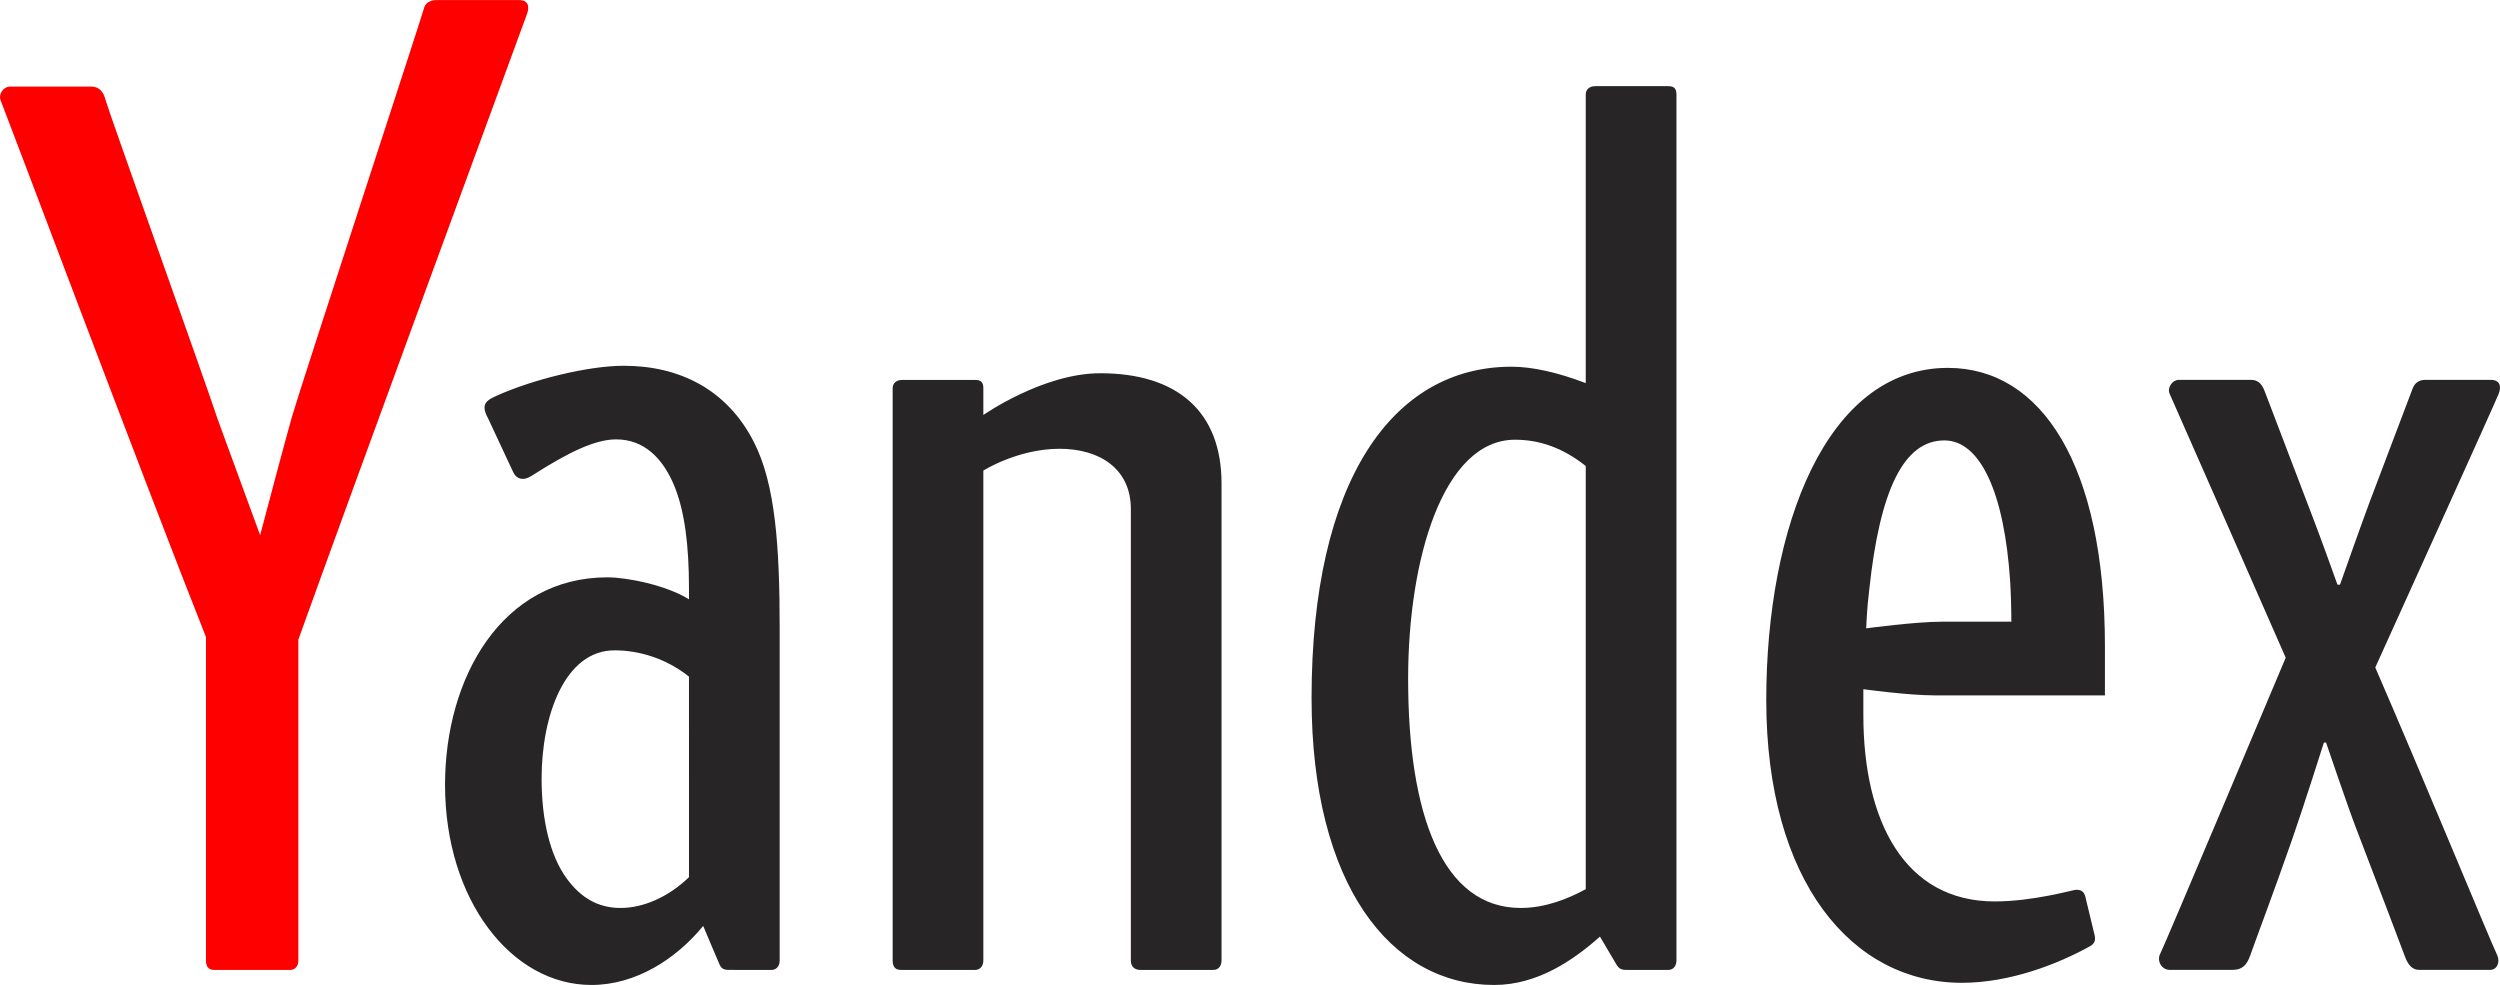 yandex（扬德克斯浏览器）矢量logo0